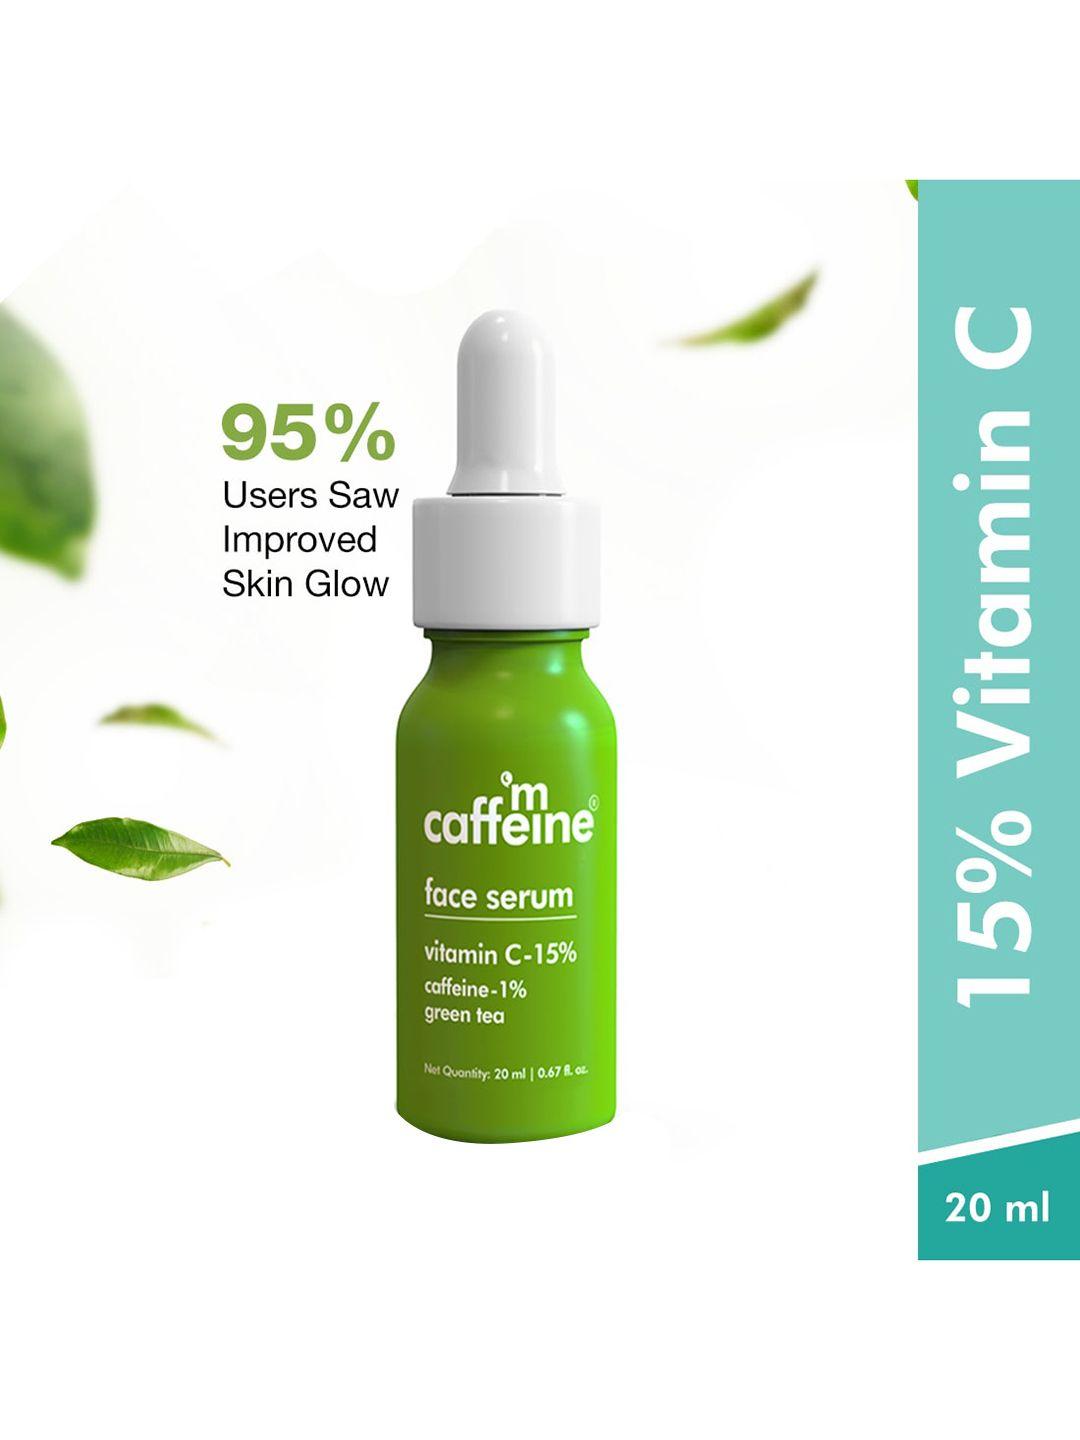 mcaffeine green tea & vitamin c face serum 20ml